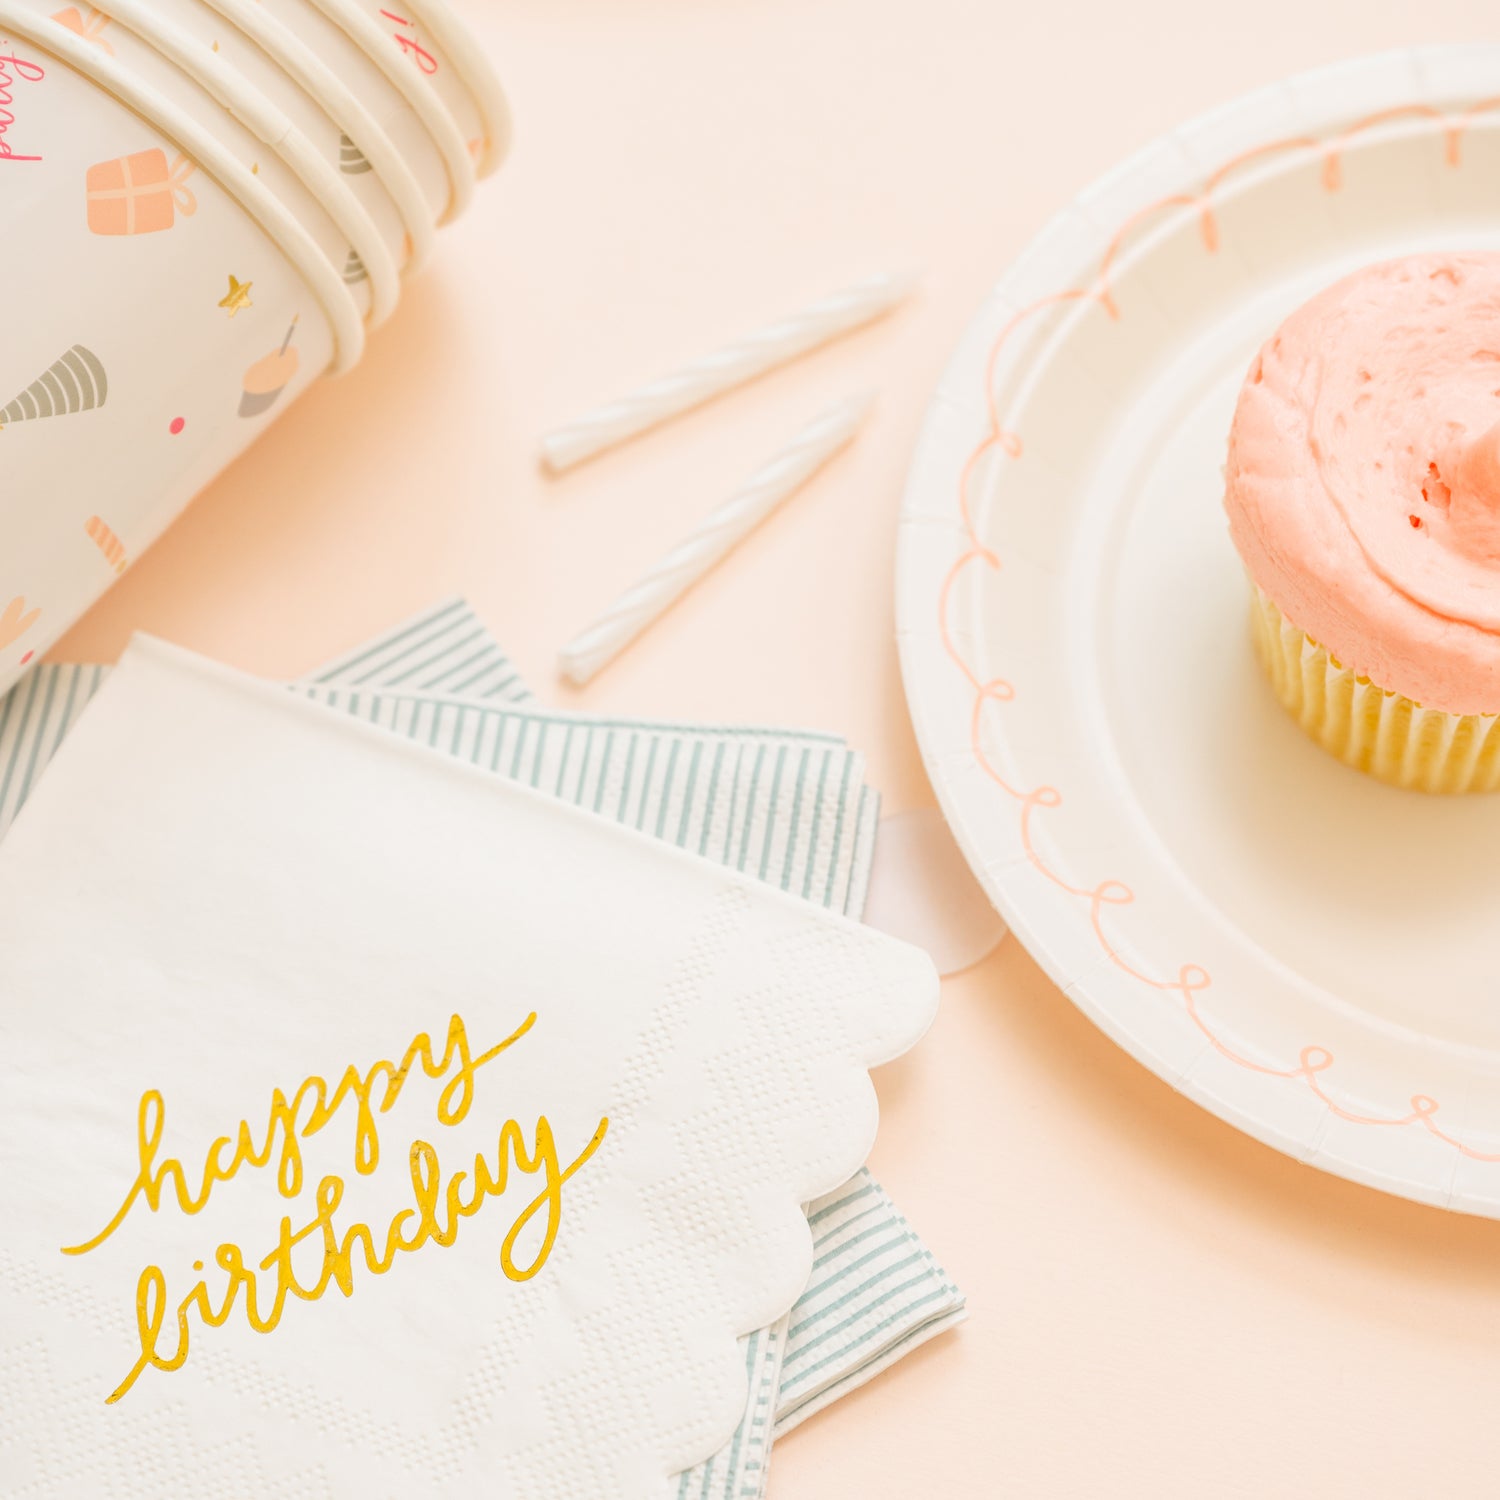 Gold foil happy birthday napkins next to birthday cupcake